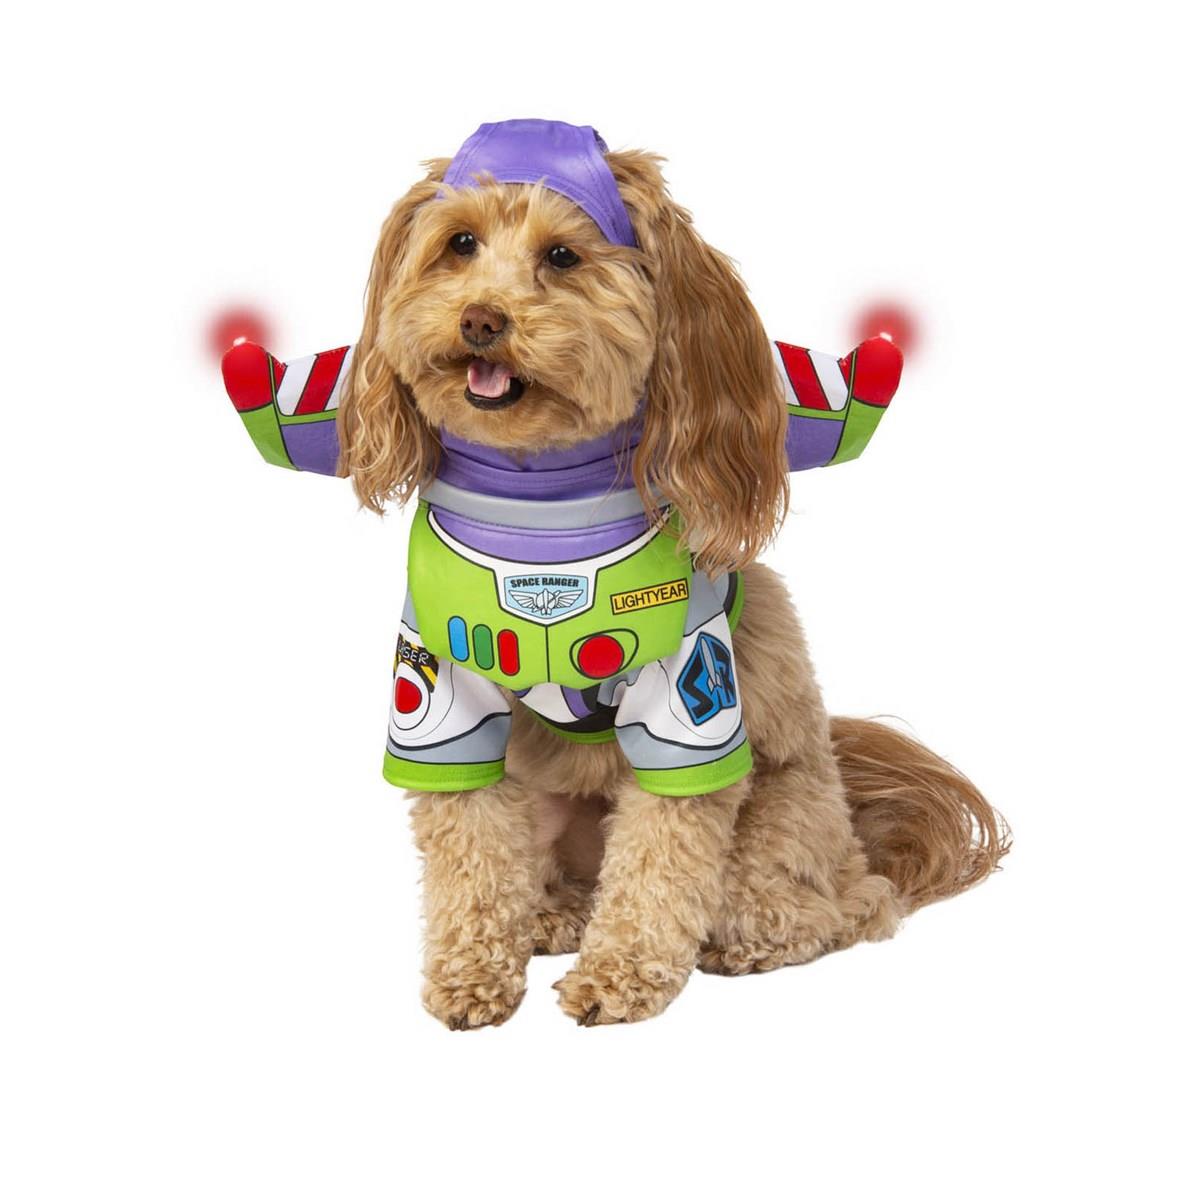 283935 Buzz Lightyear Pet Costume, Small 11